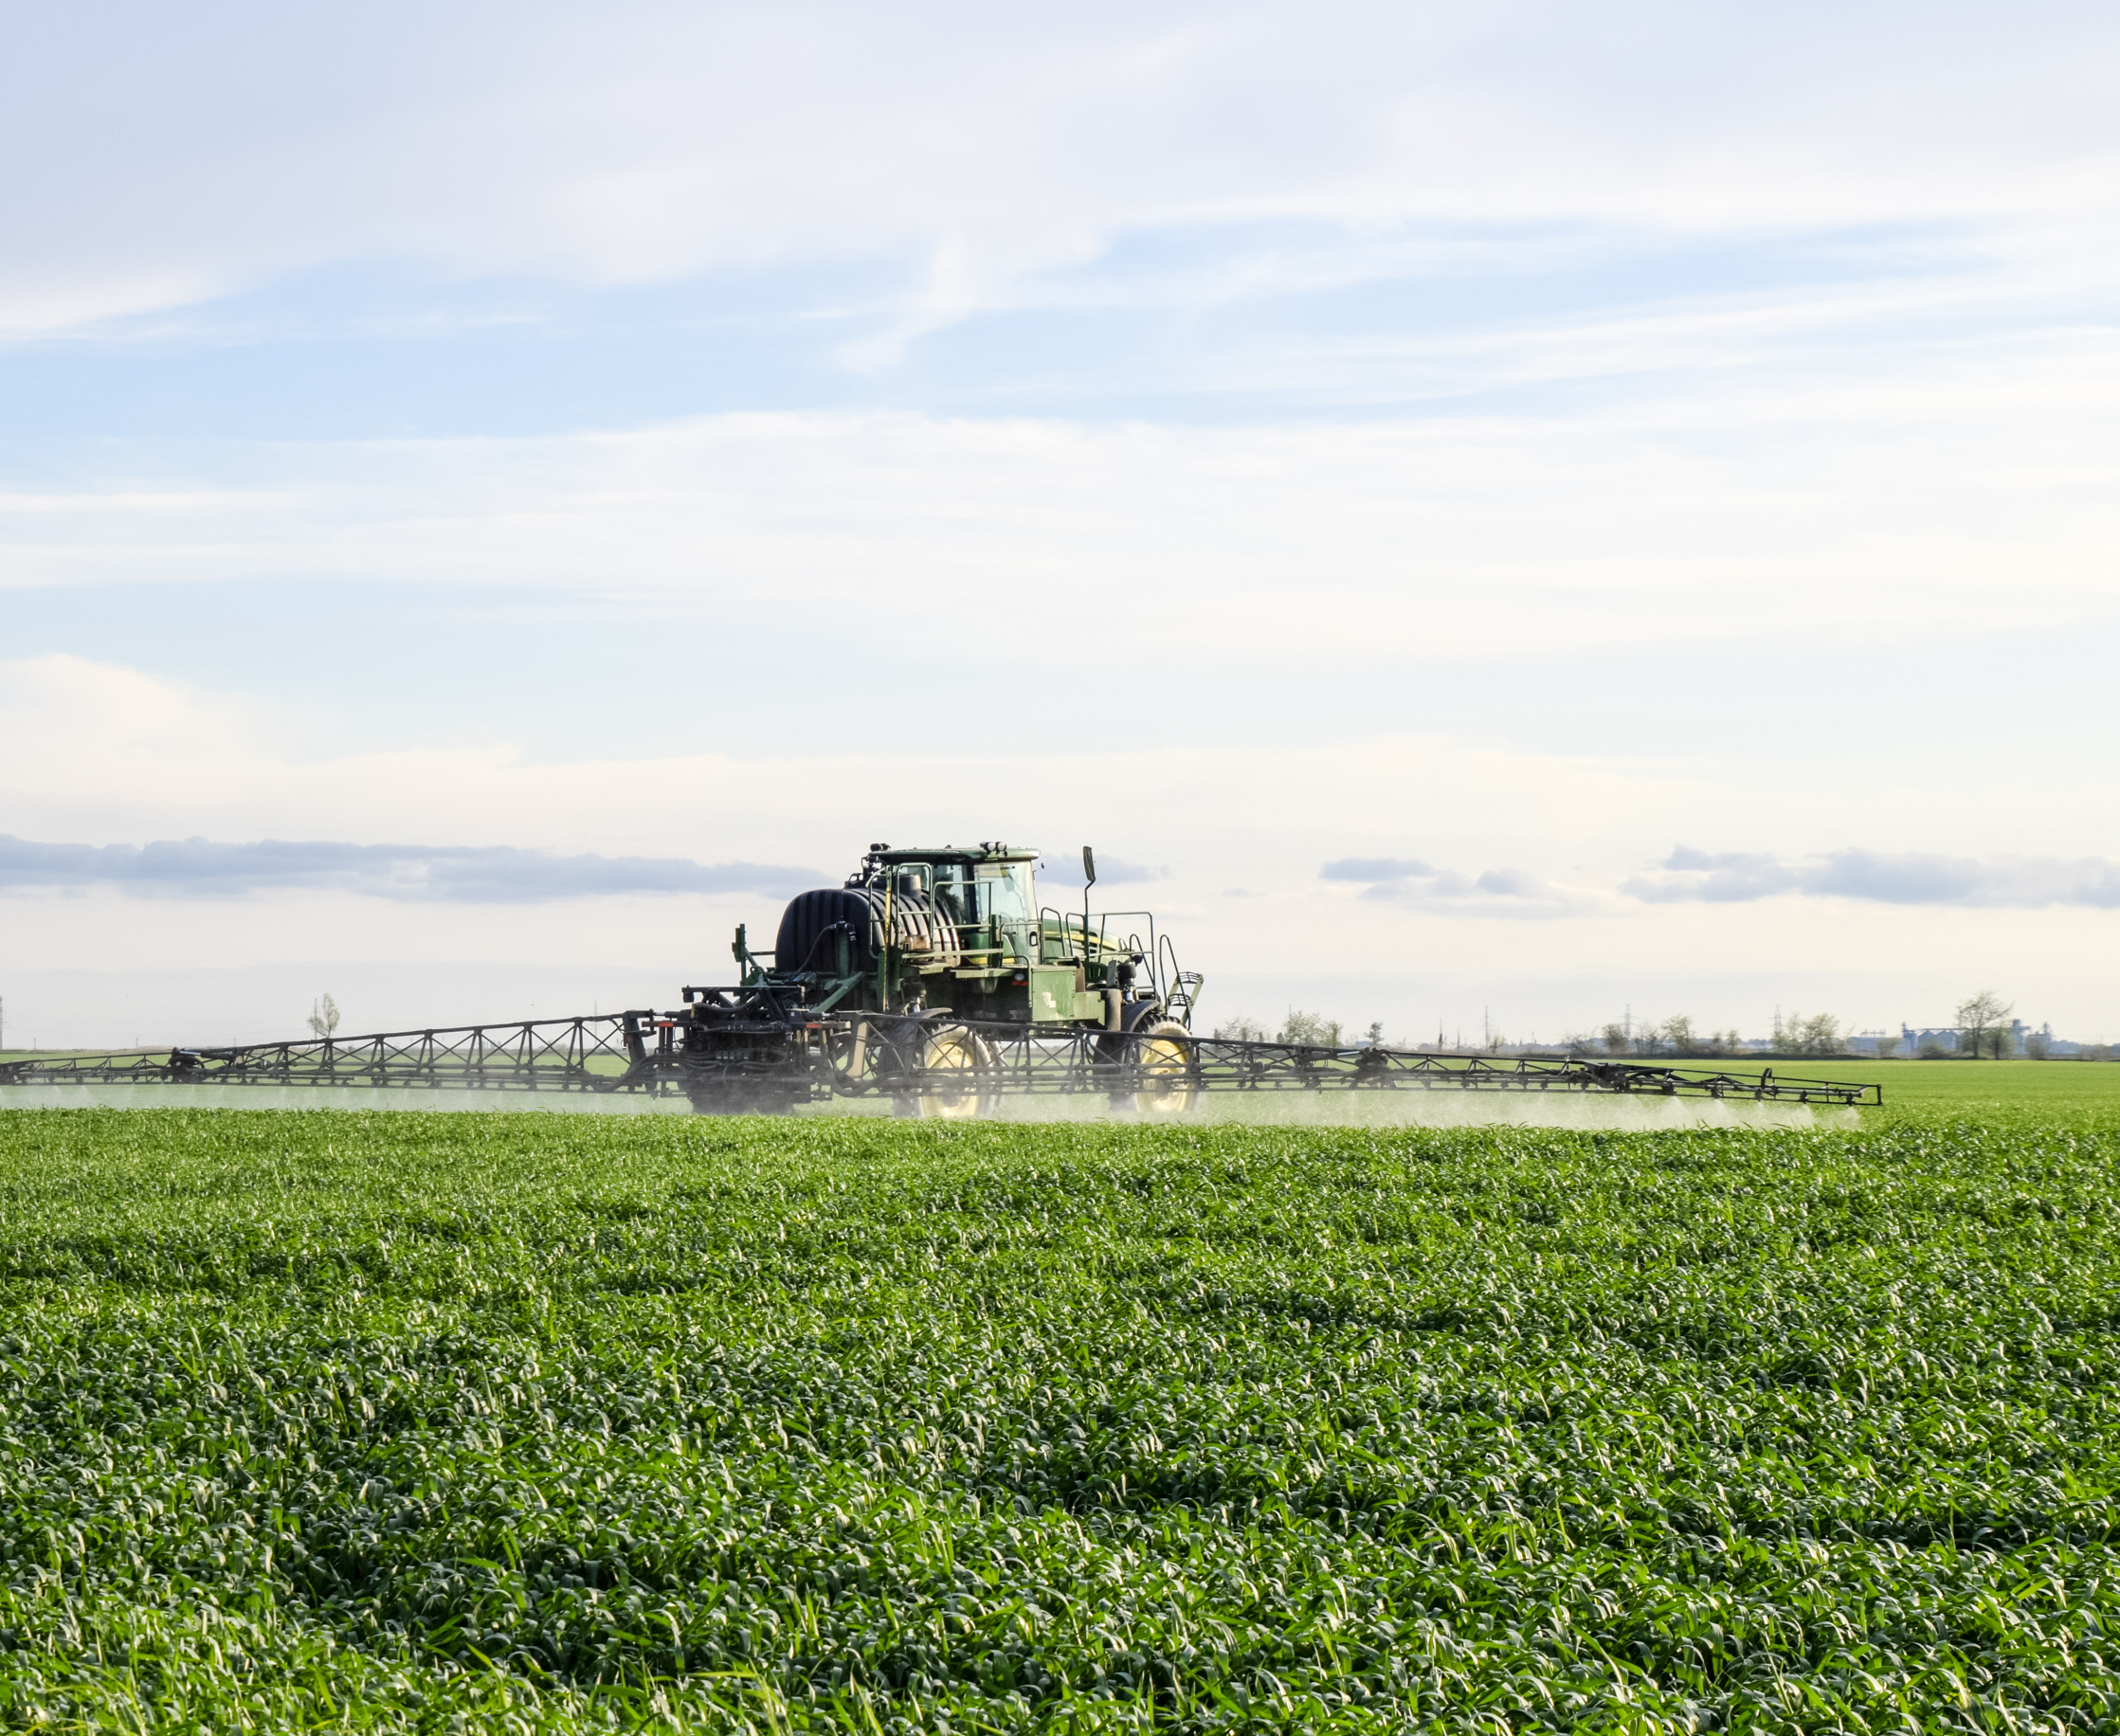 Copa-Cogeca is warning that planned EU anti-dumping duties on imported liquid nitrogen will cost farmers.